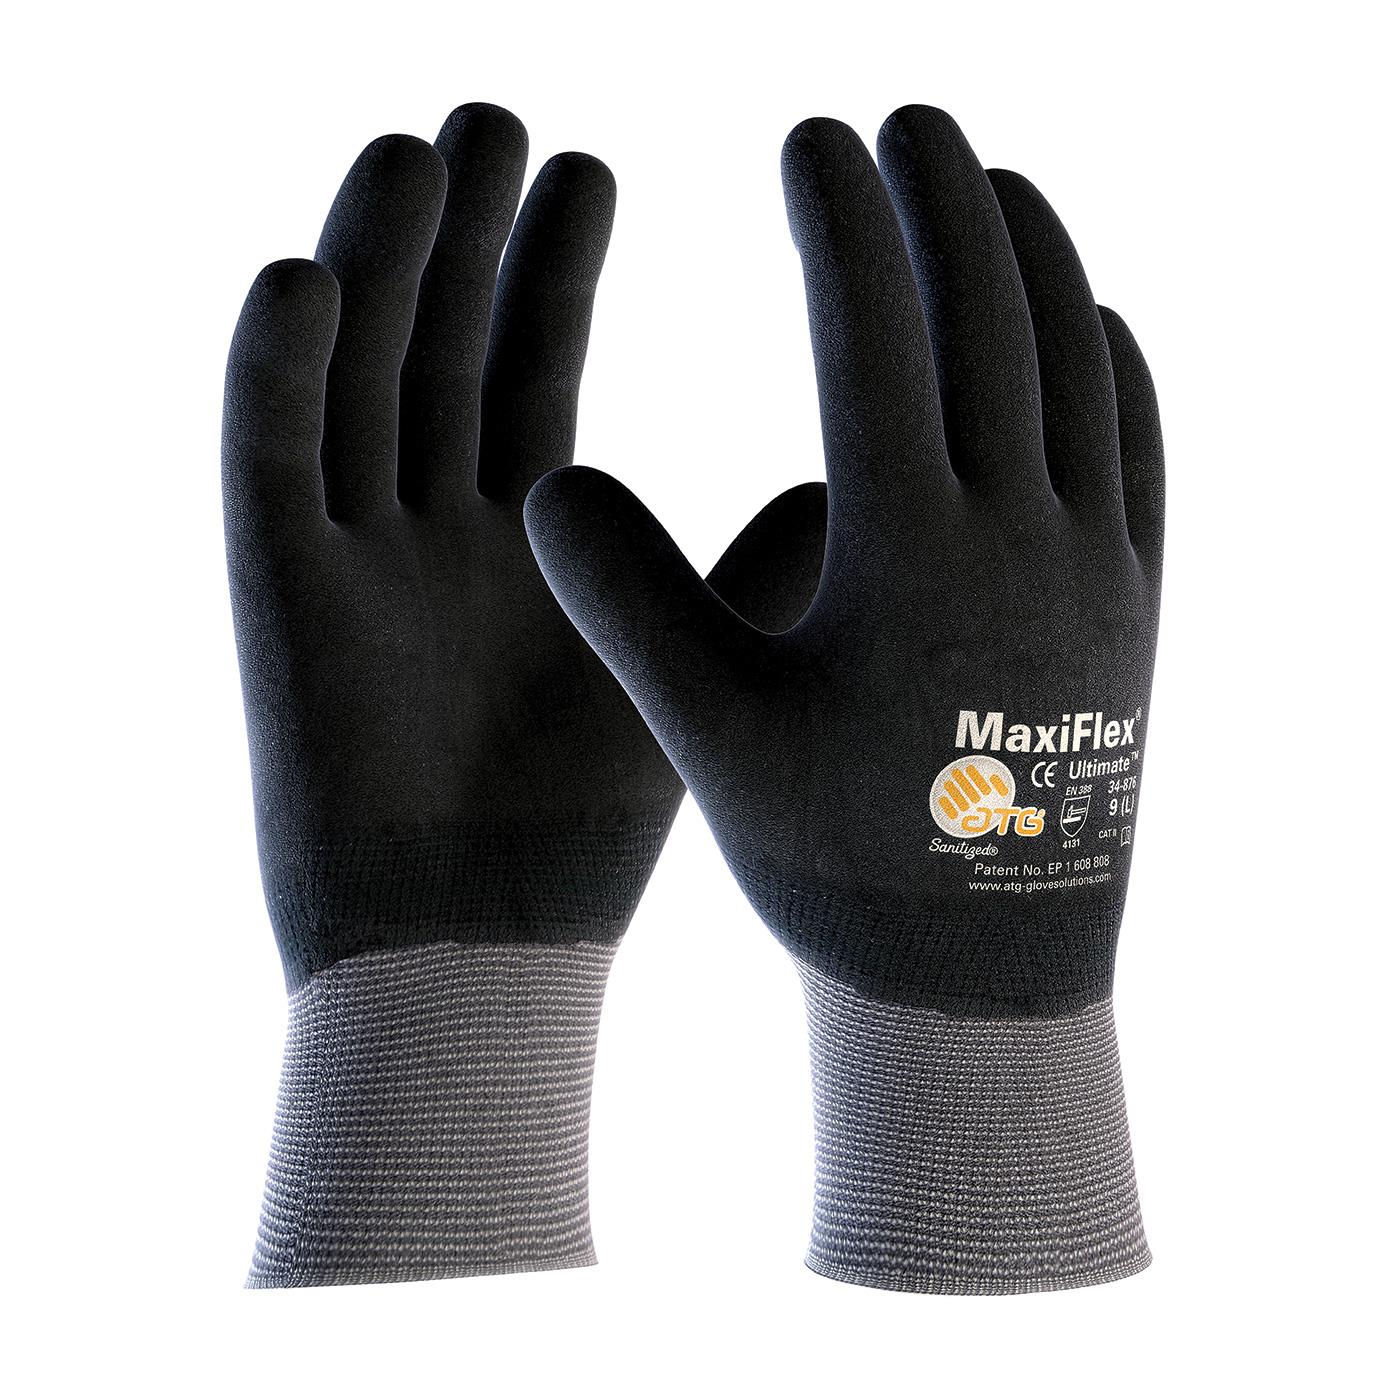 MAXIFLEX ULTIMATE MICROFOAM FULL NITRILE - General Purpose Gloves